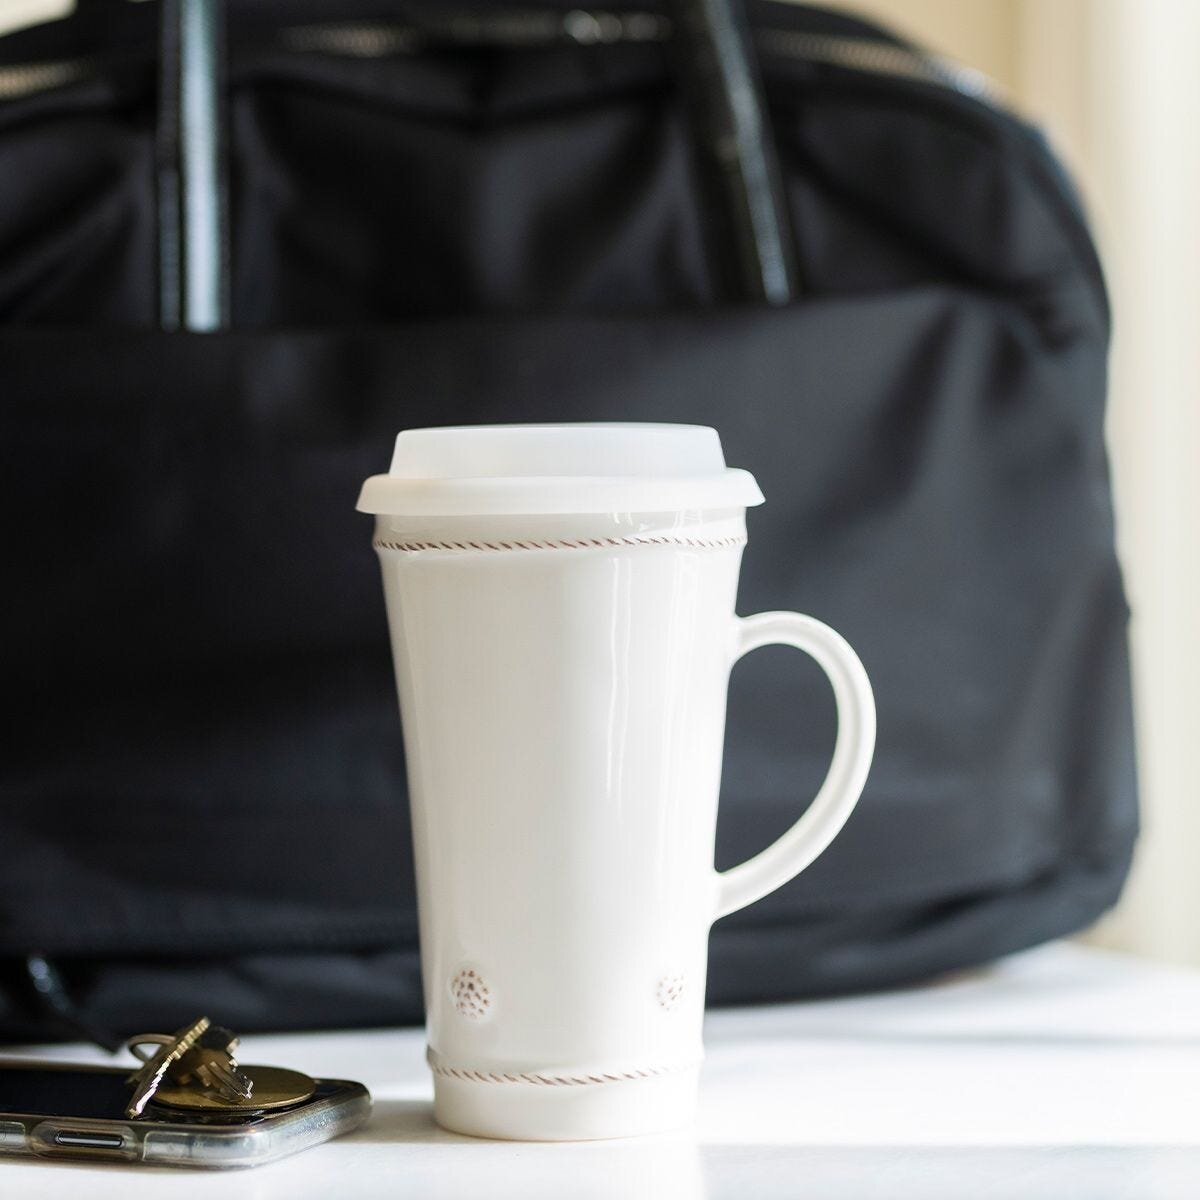 Berry & Thread Travel Mug with Silicone Lid - Whitewash